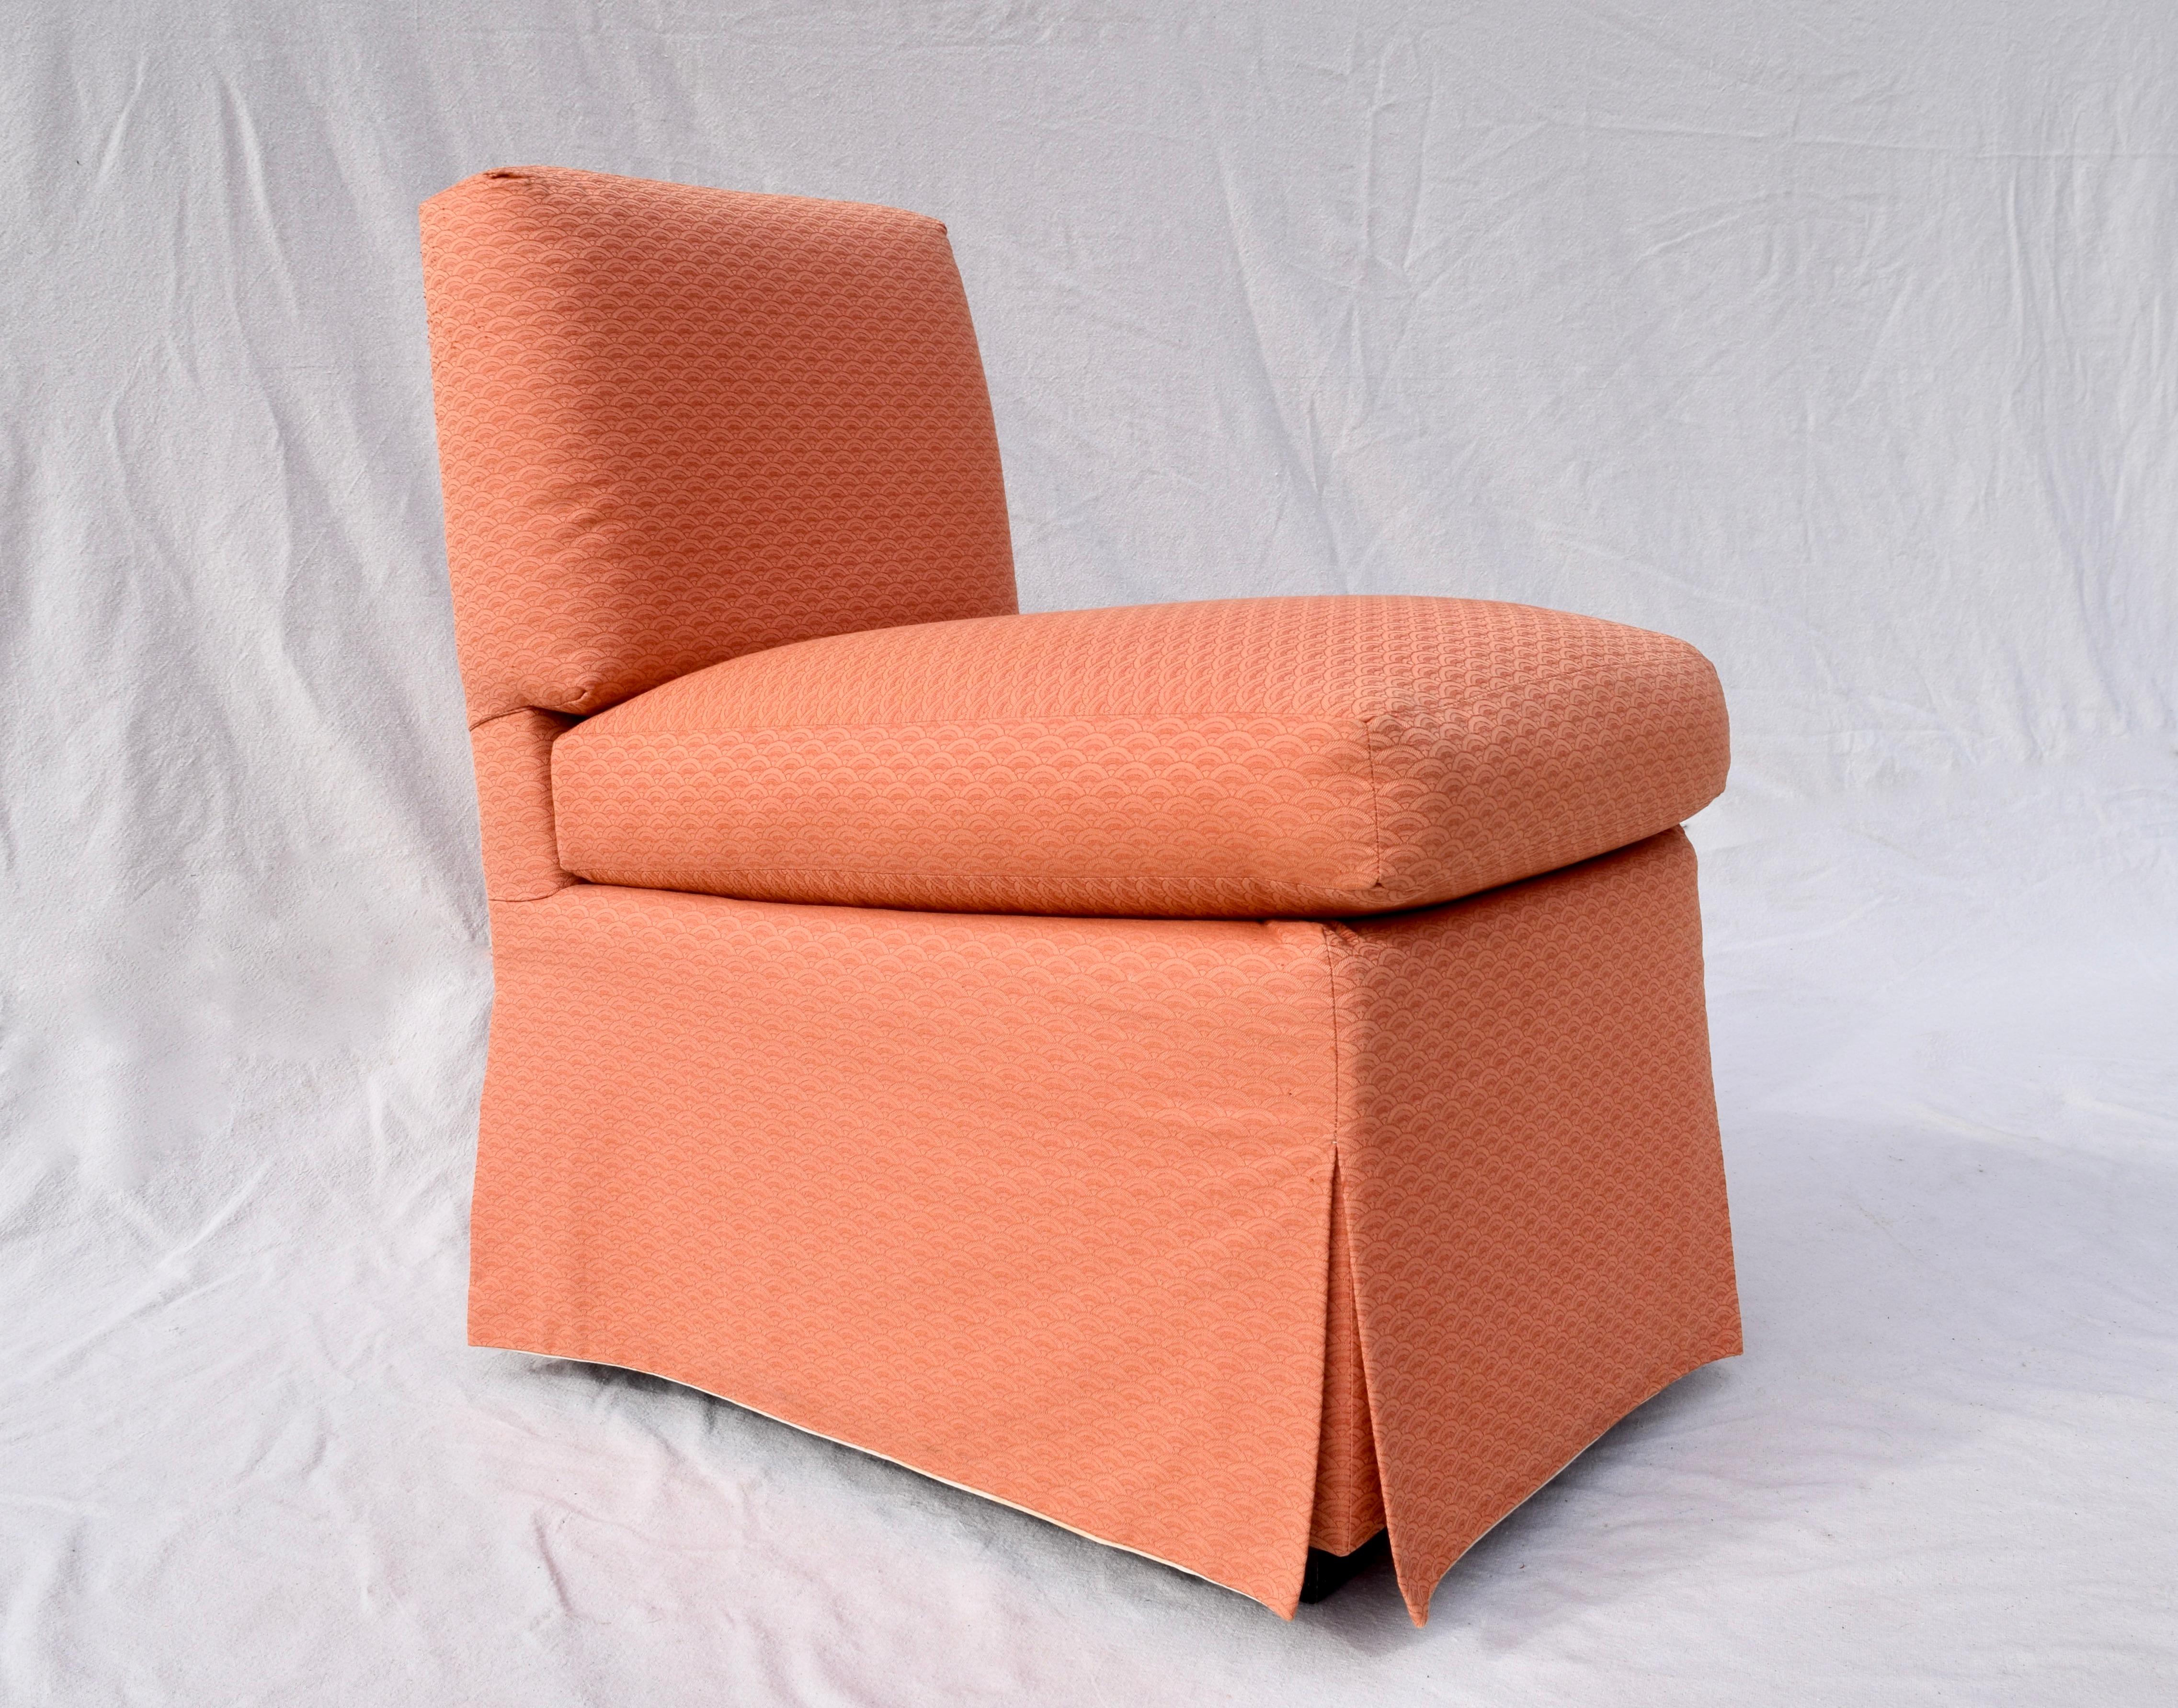 Upholstery Billy Baldwin Slipper Chairs